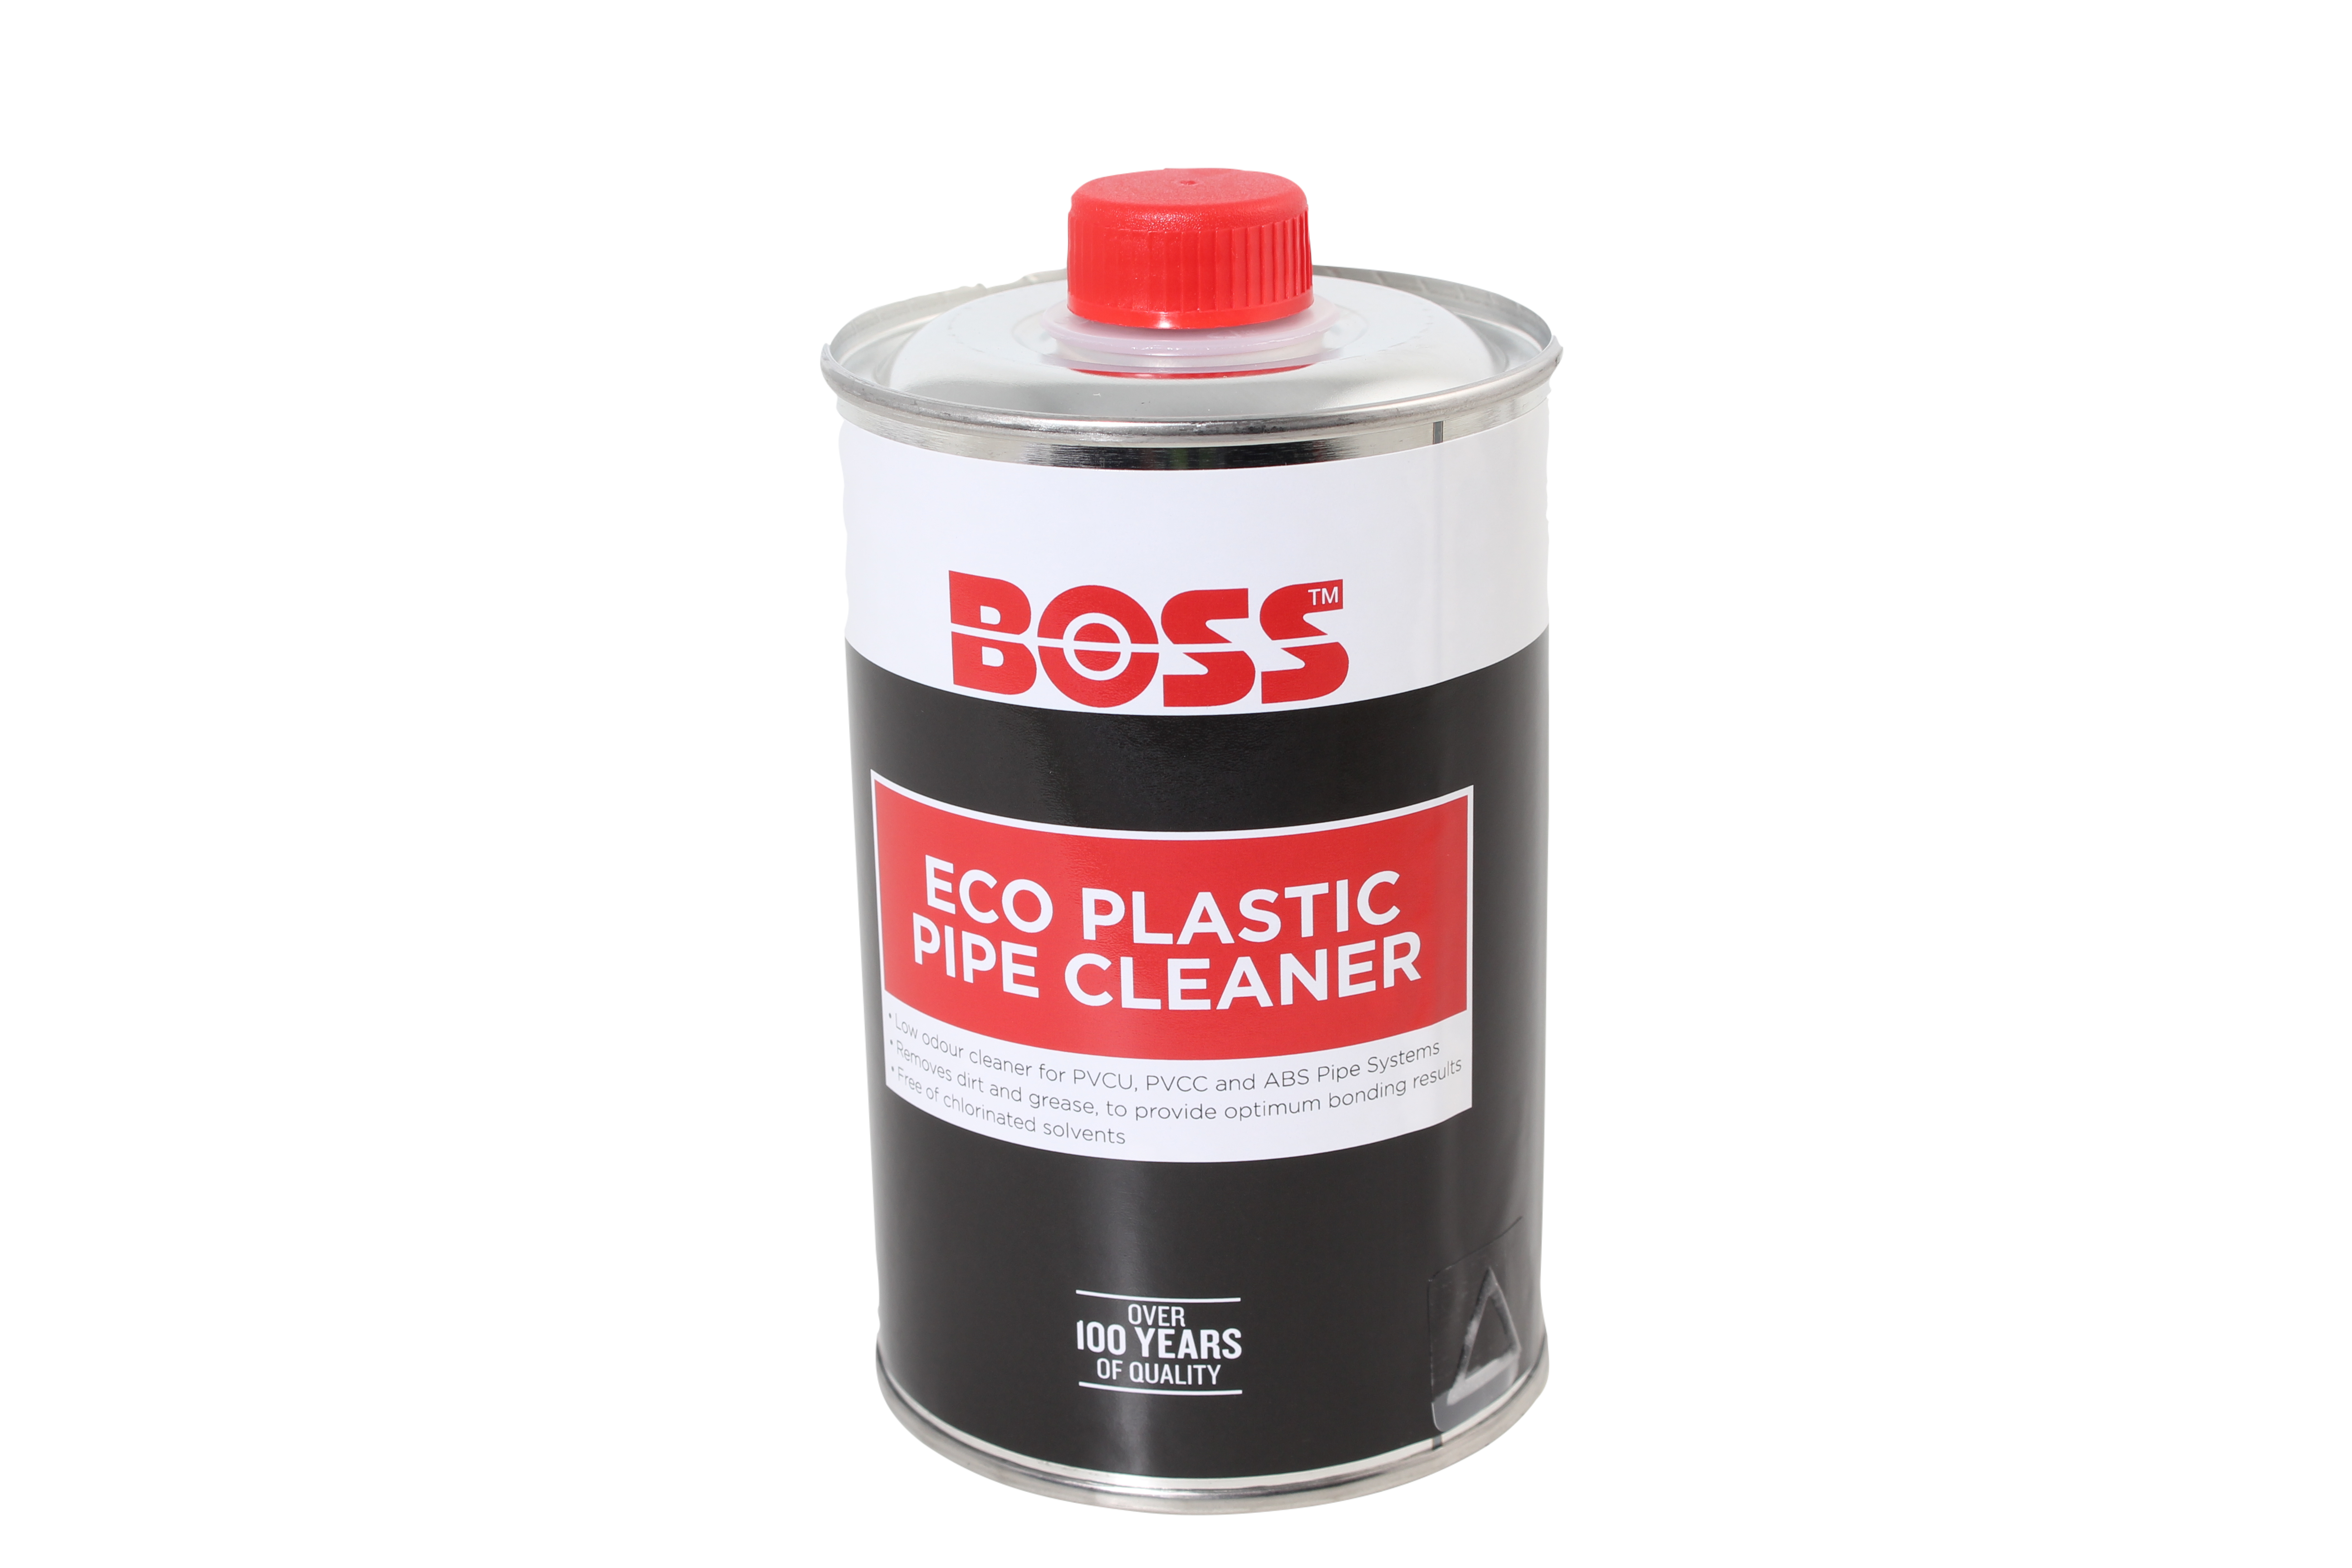 BOSS™ Eco Plastic Pipe Cleaner